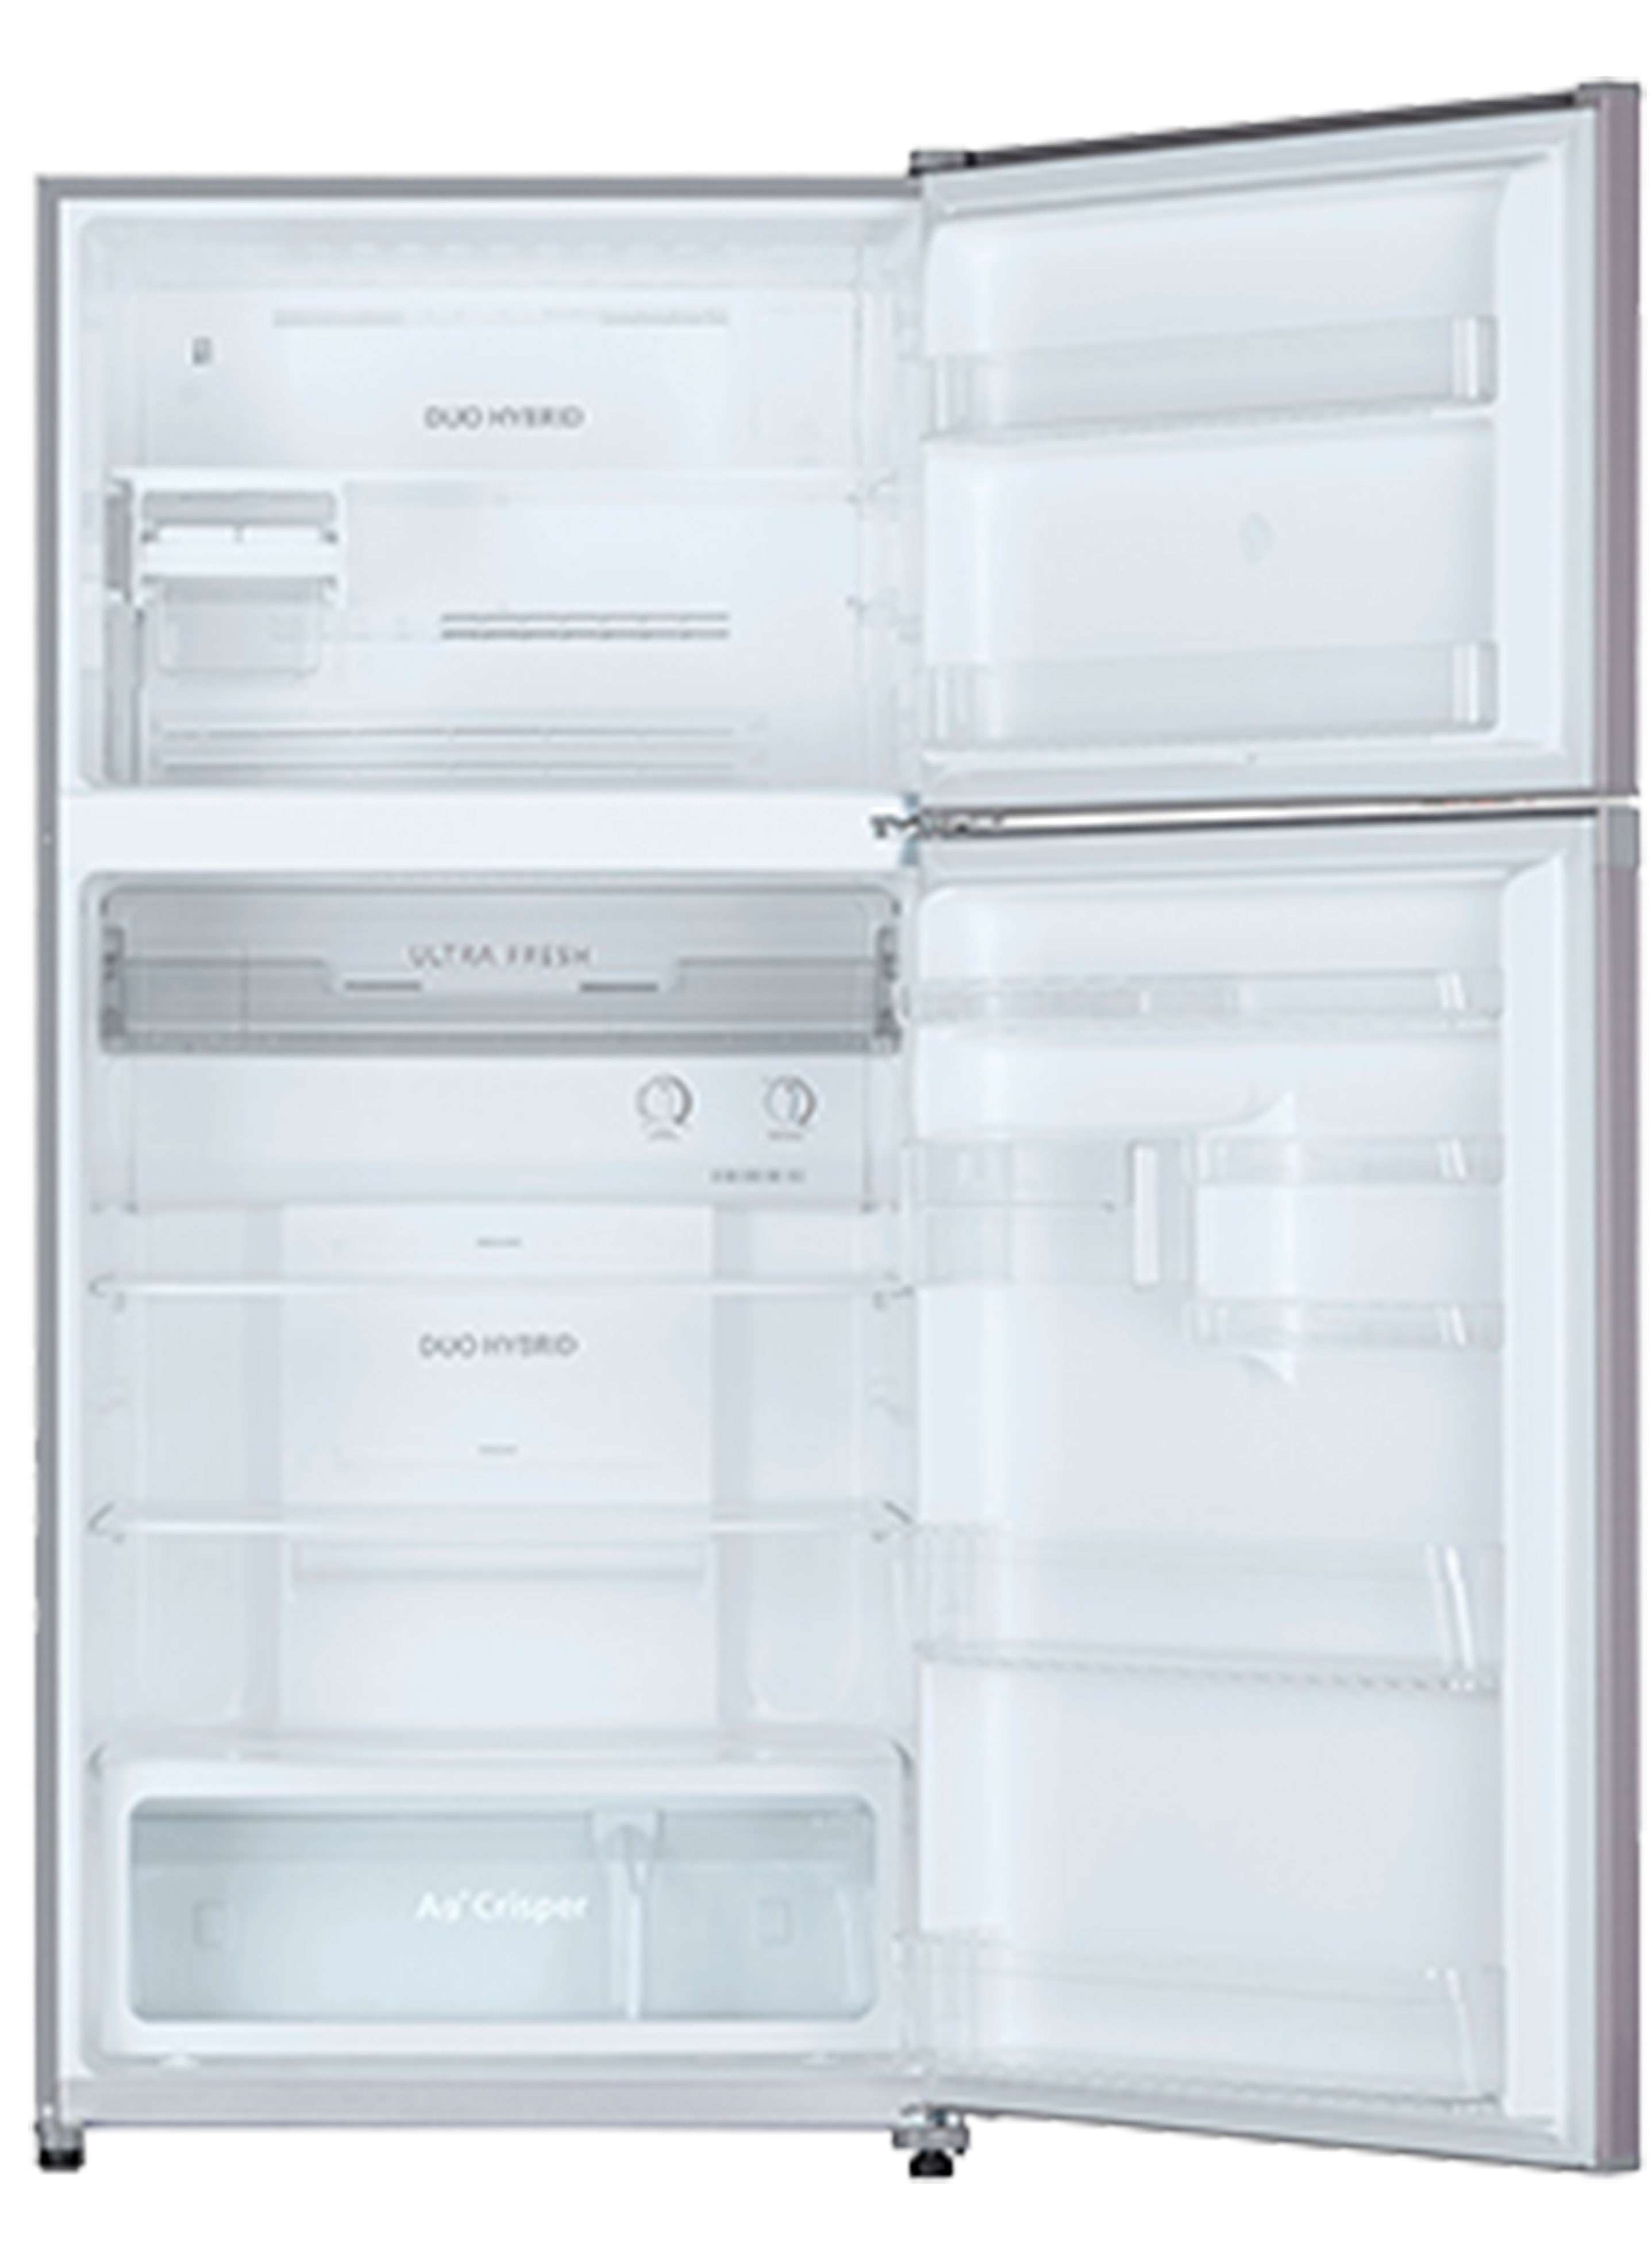 Refrigerator Inside View